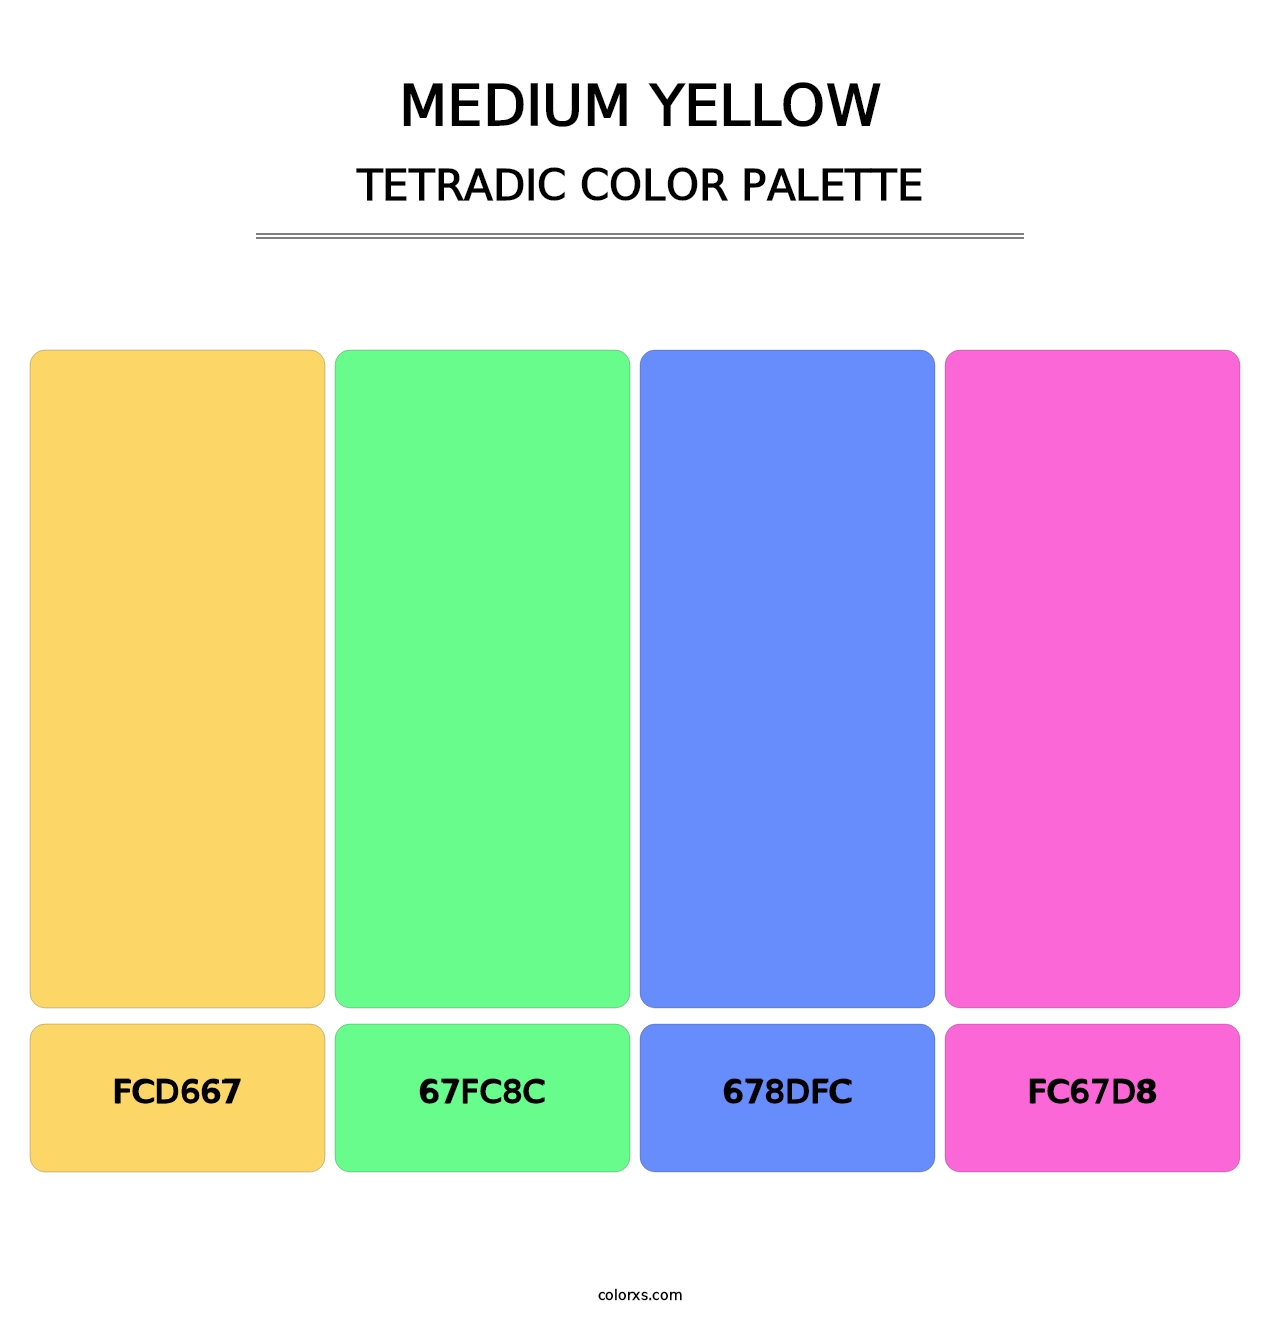 Medium Yellow - Tetradic Color Palette